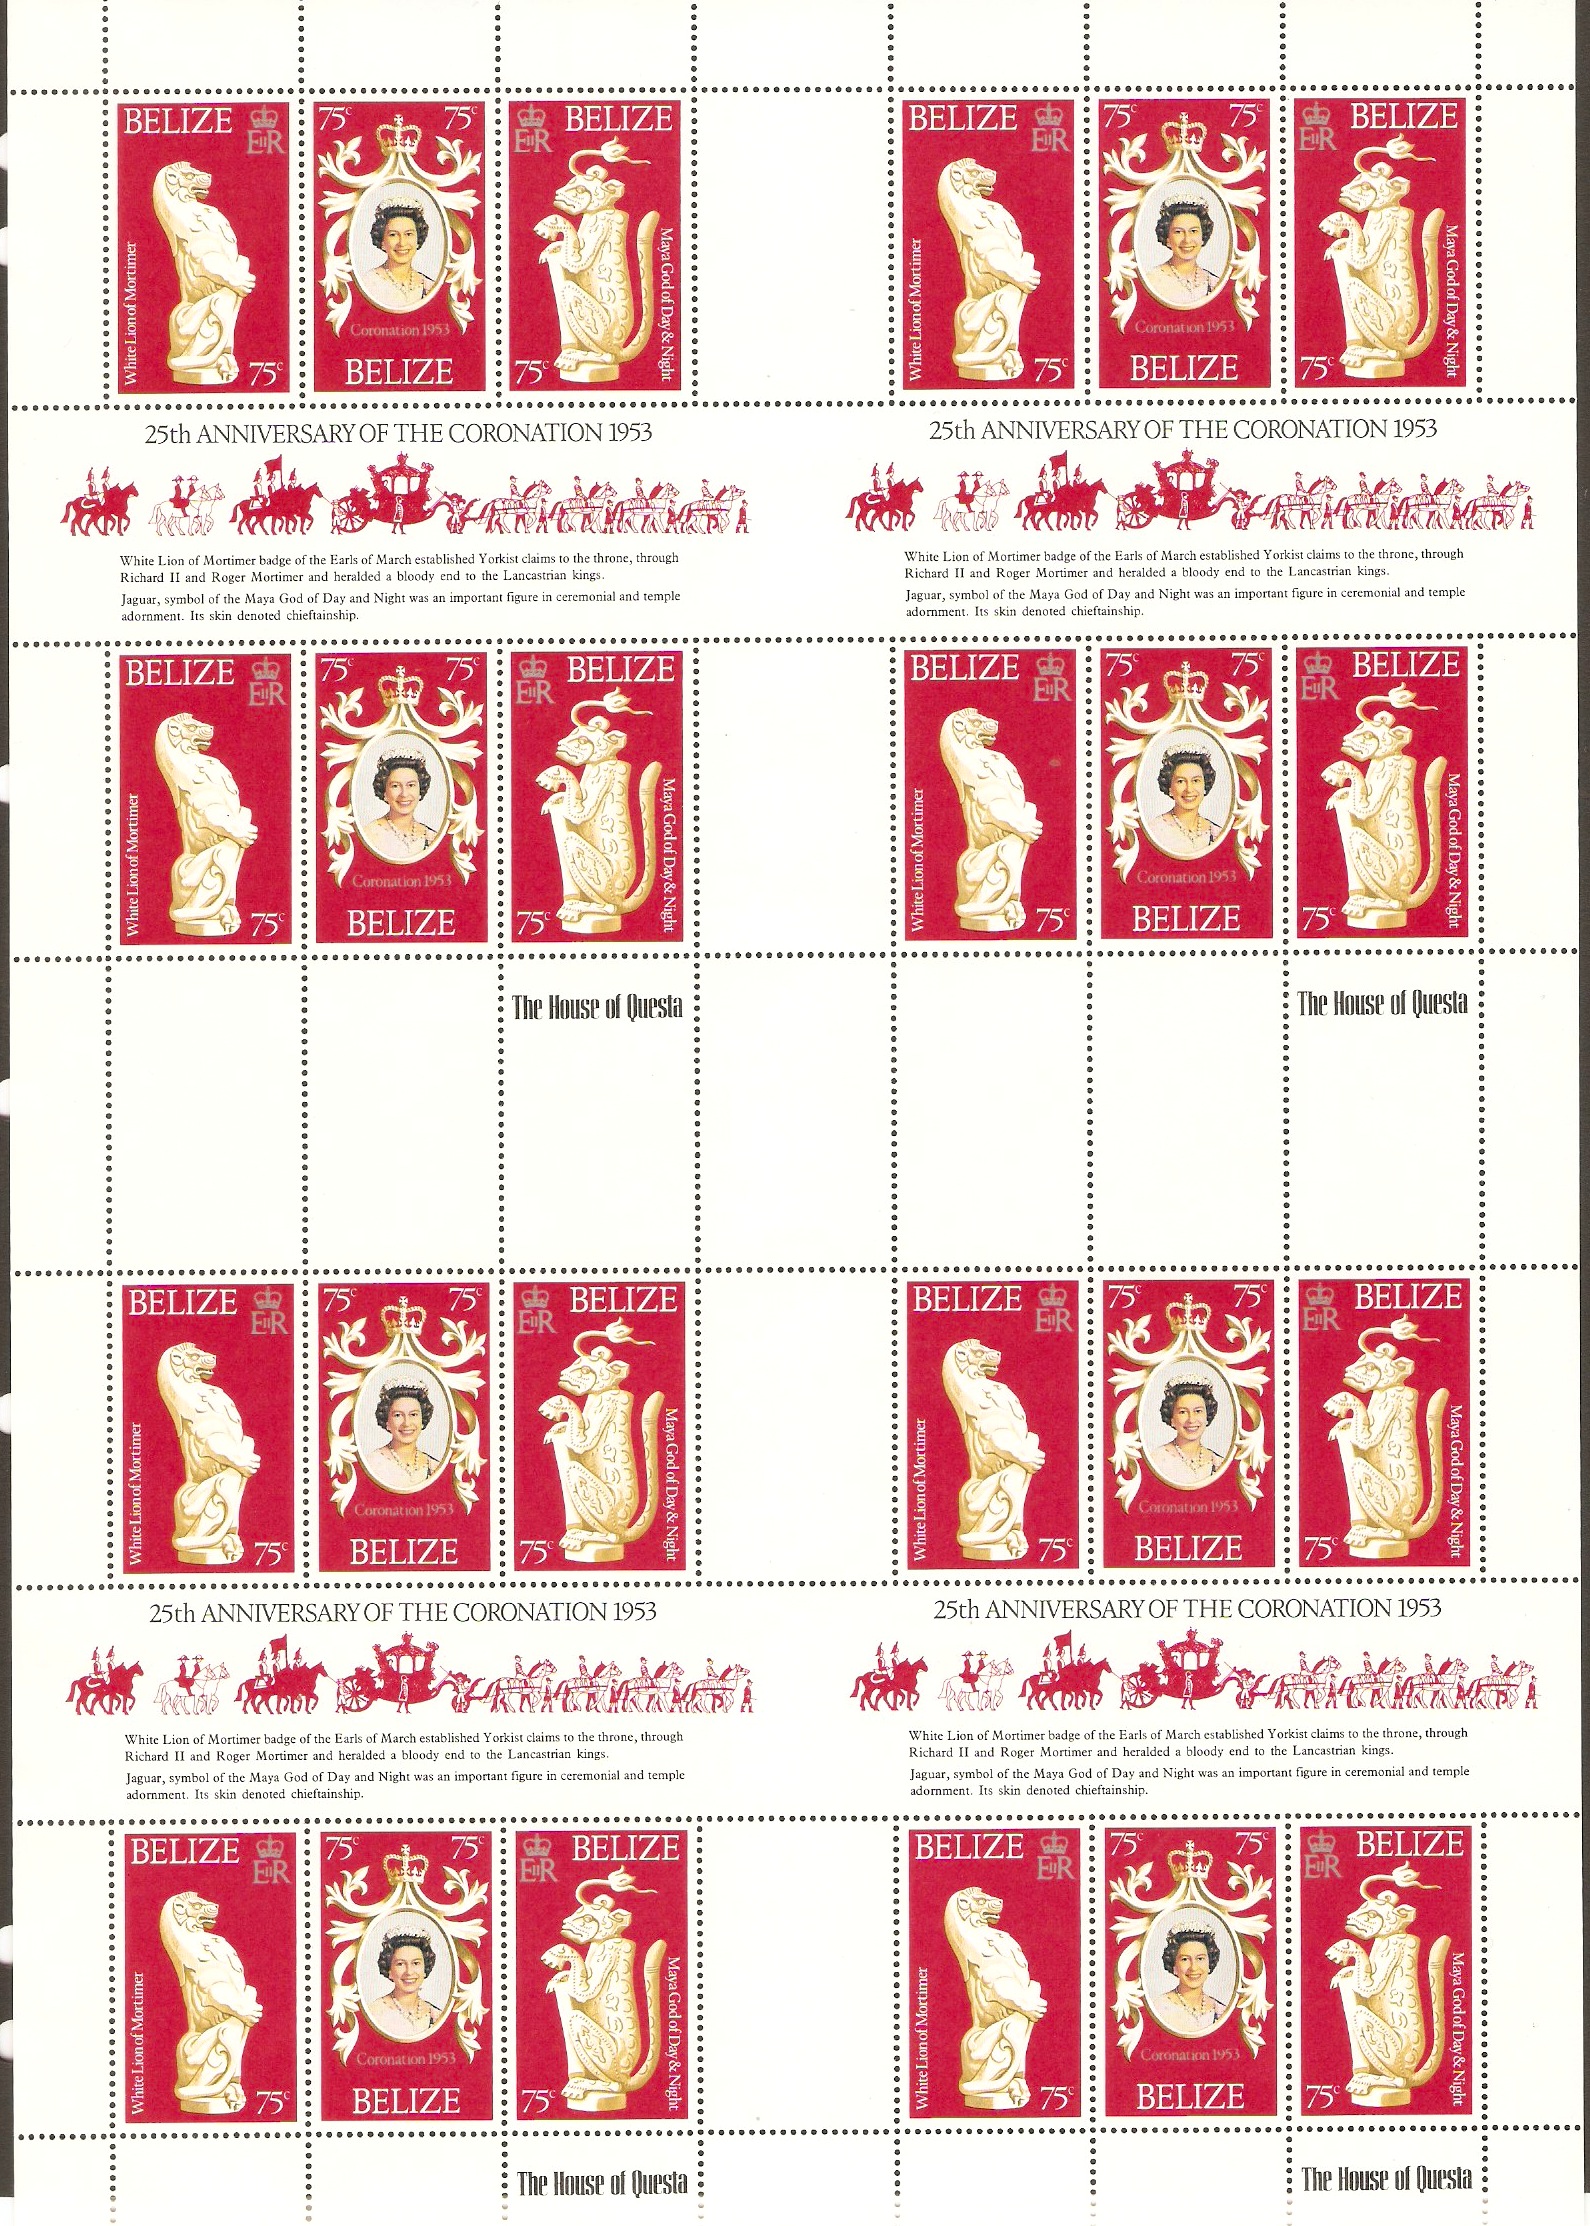 Belize 1978 Coronation Anniversary Set. SG464-SG466.